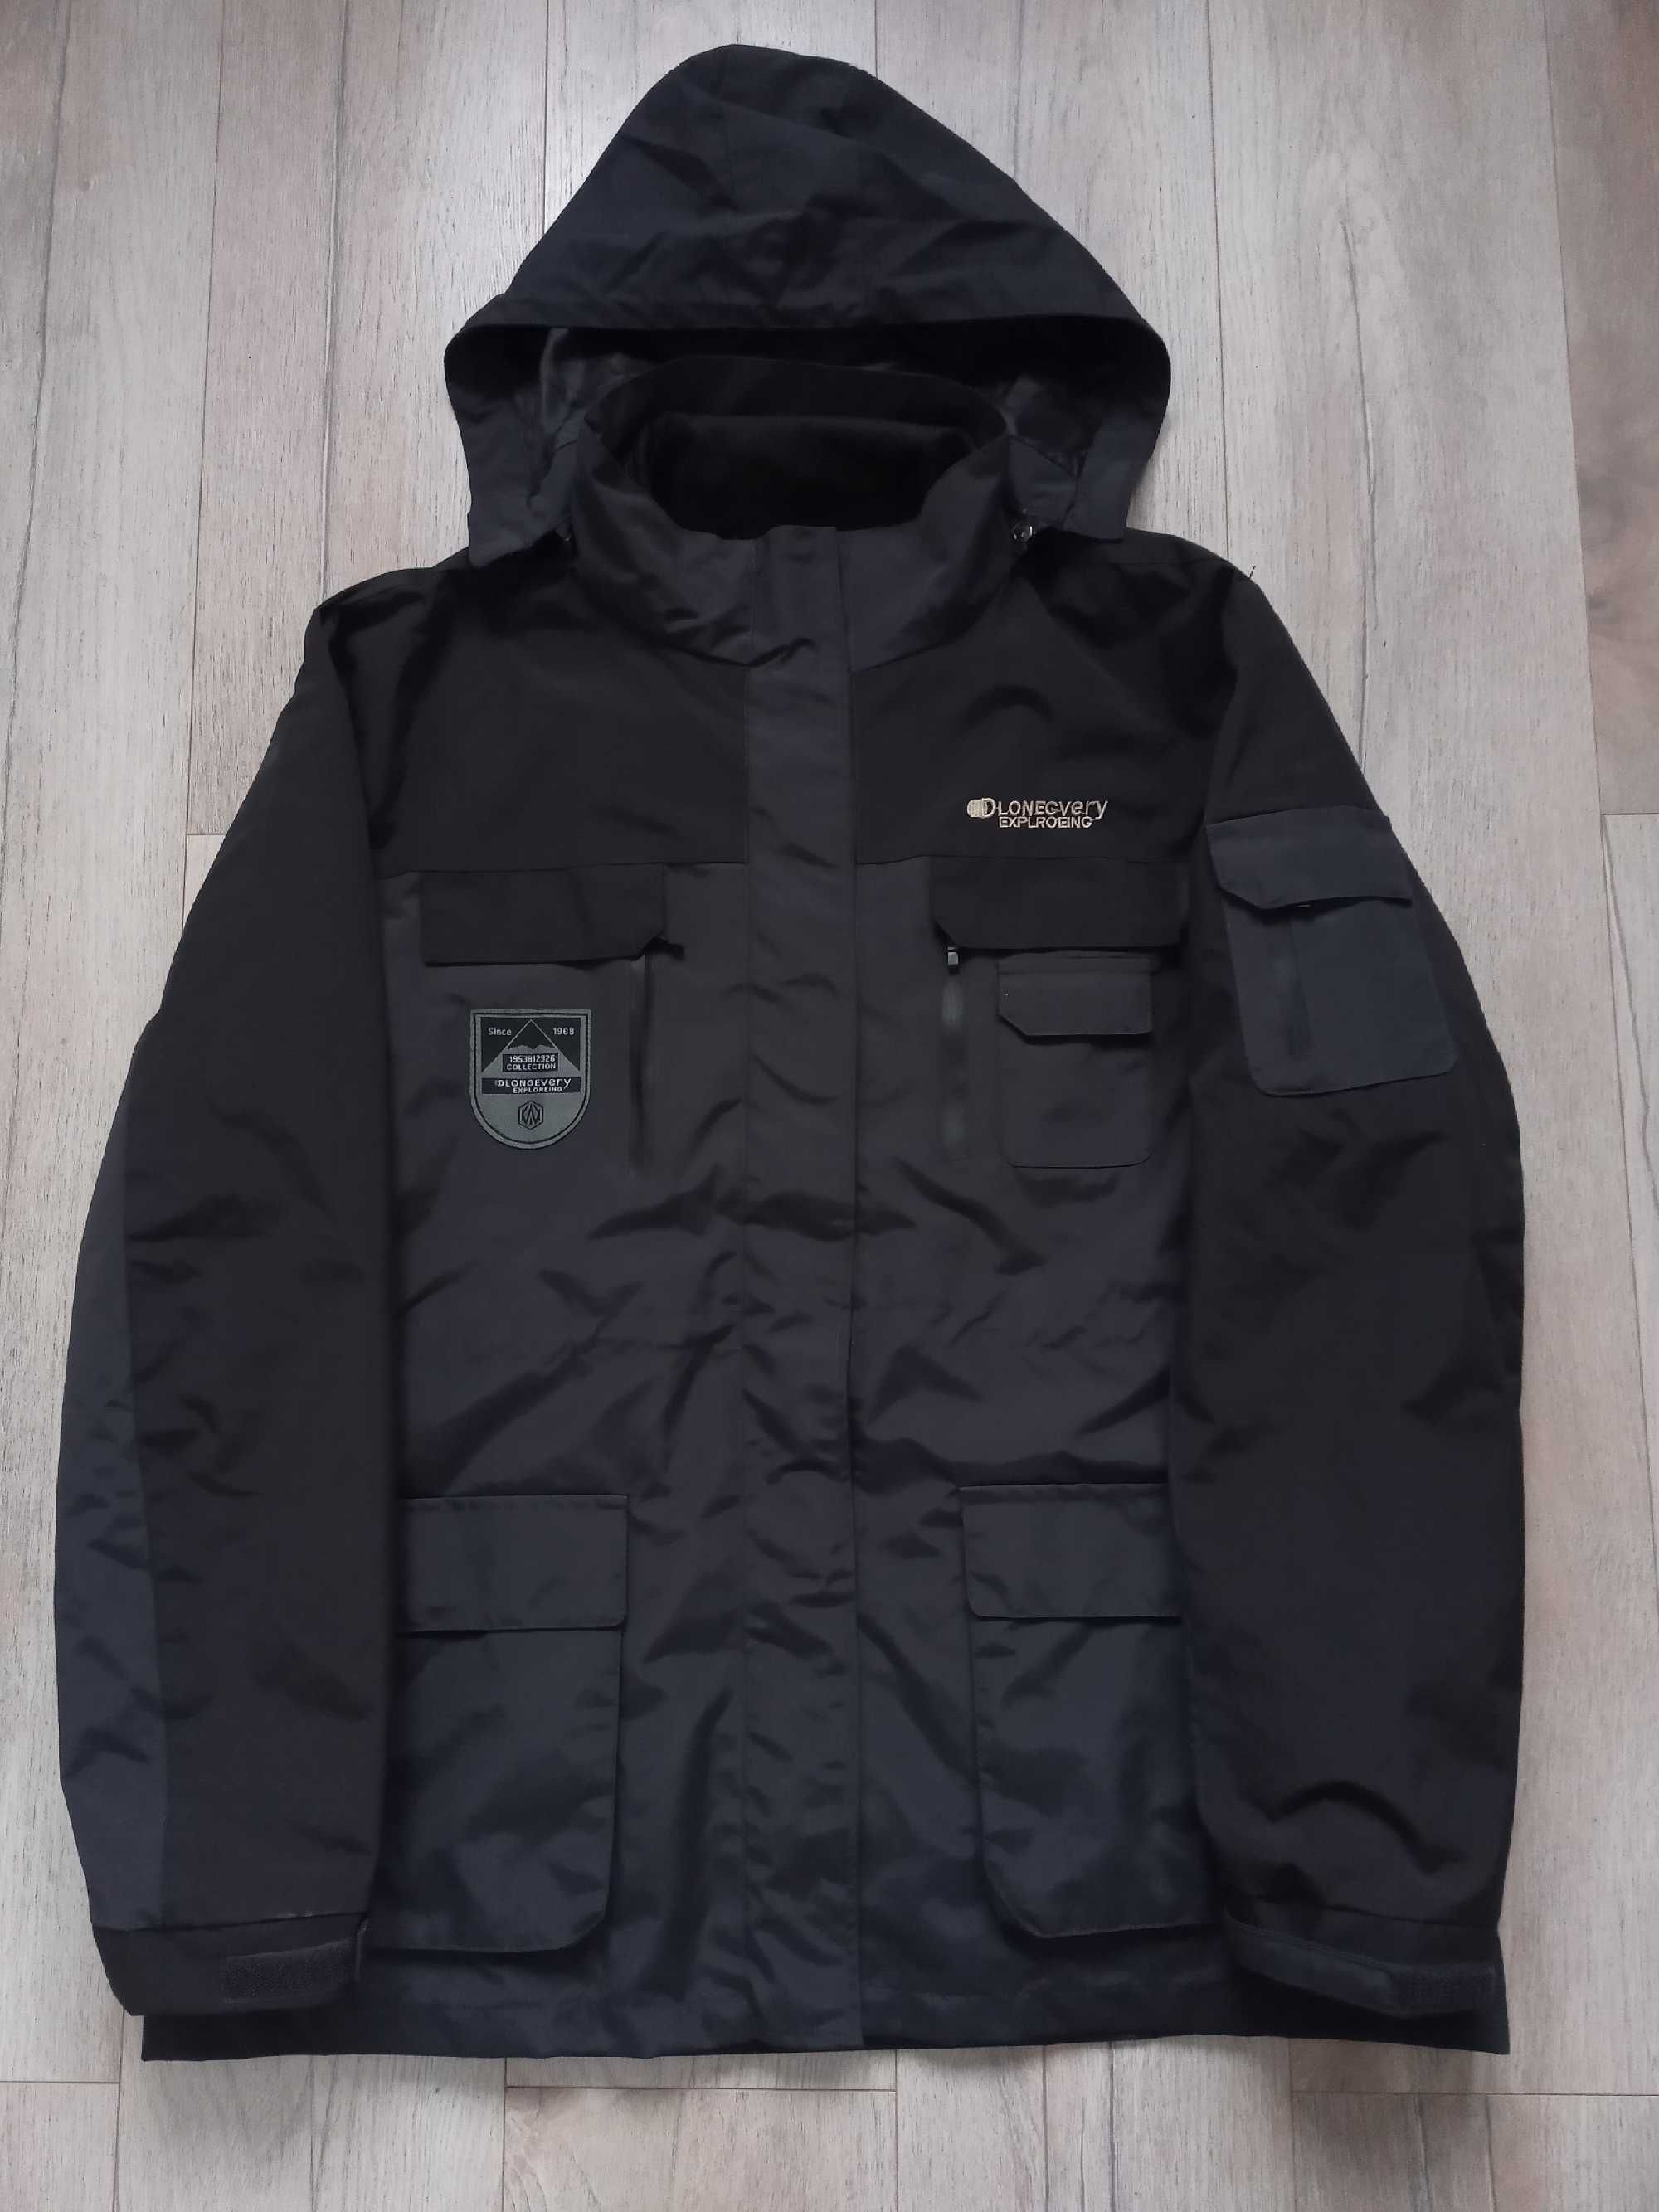 Зимняя куртка Lonegvery explroeing XL outdoor jacket|Haglofs|gore tex|